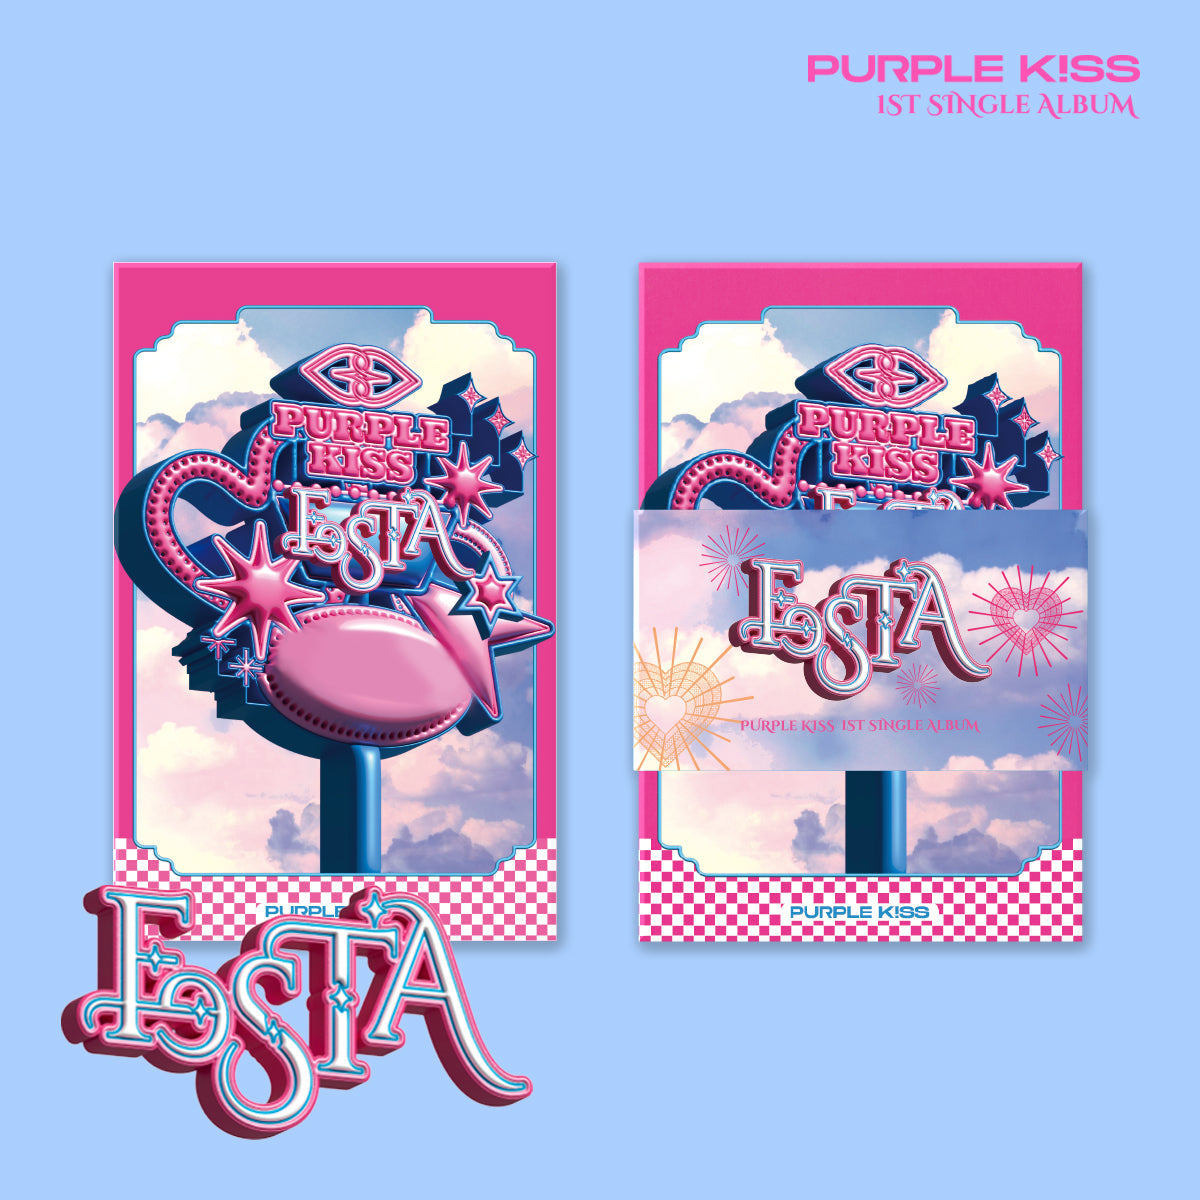 PURPLE KISS 1ST SINGLE ALBUM 'FESTA' (POCA) COVER